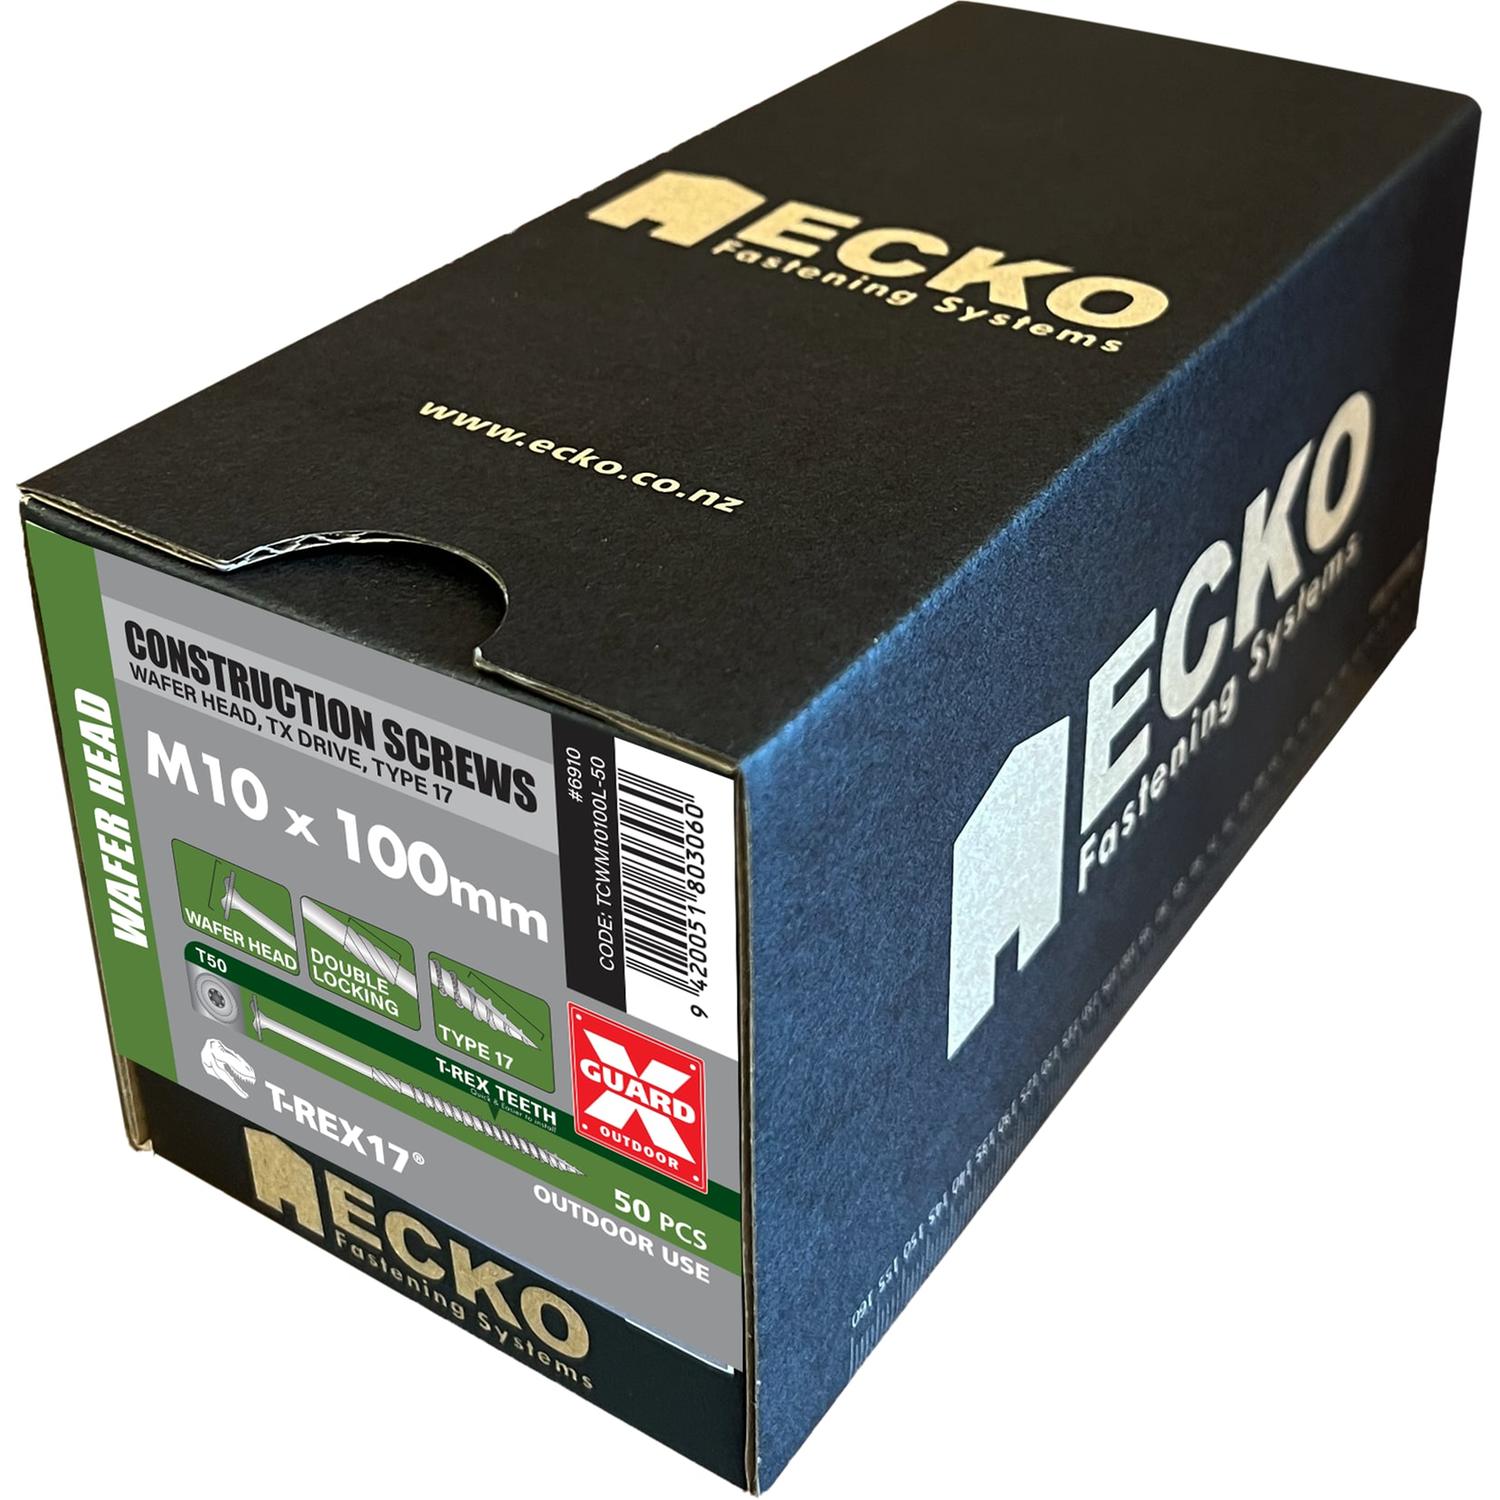 Ecko T-Rex17 Construction Screws M10 X 100Mm (500 Pack)